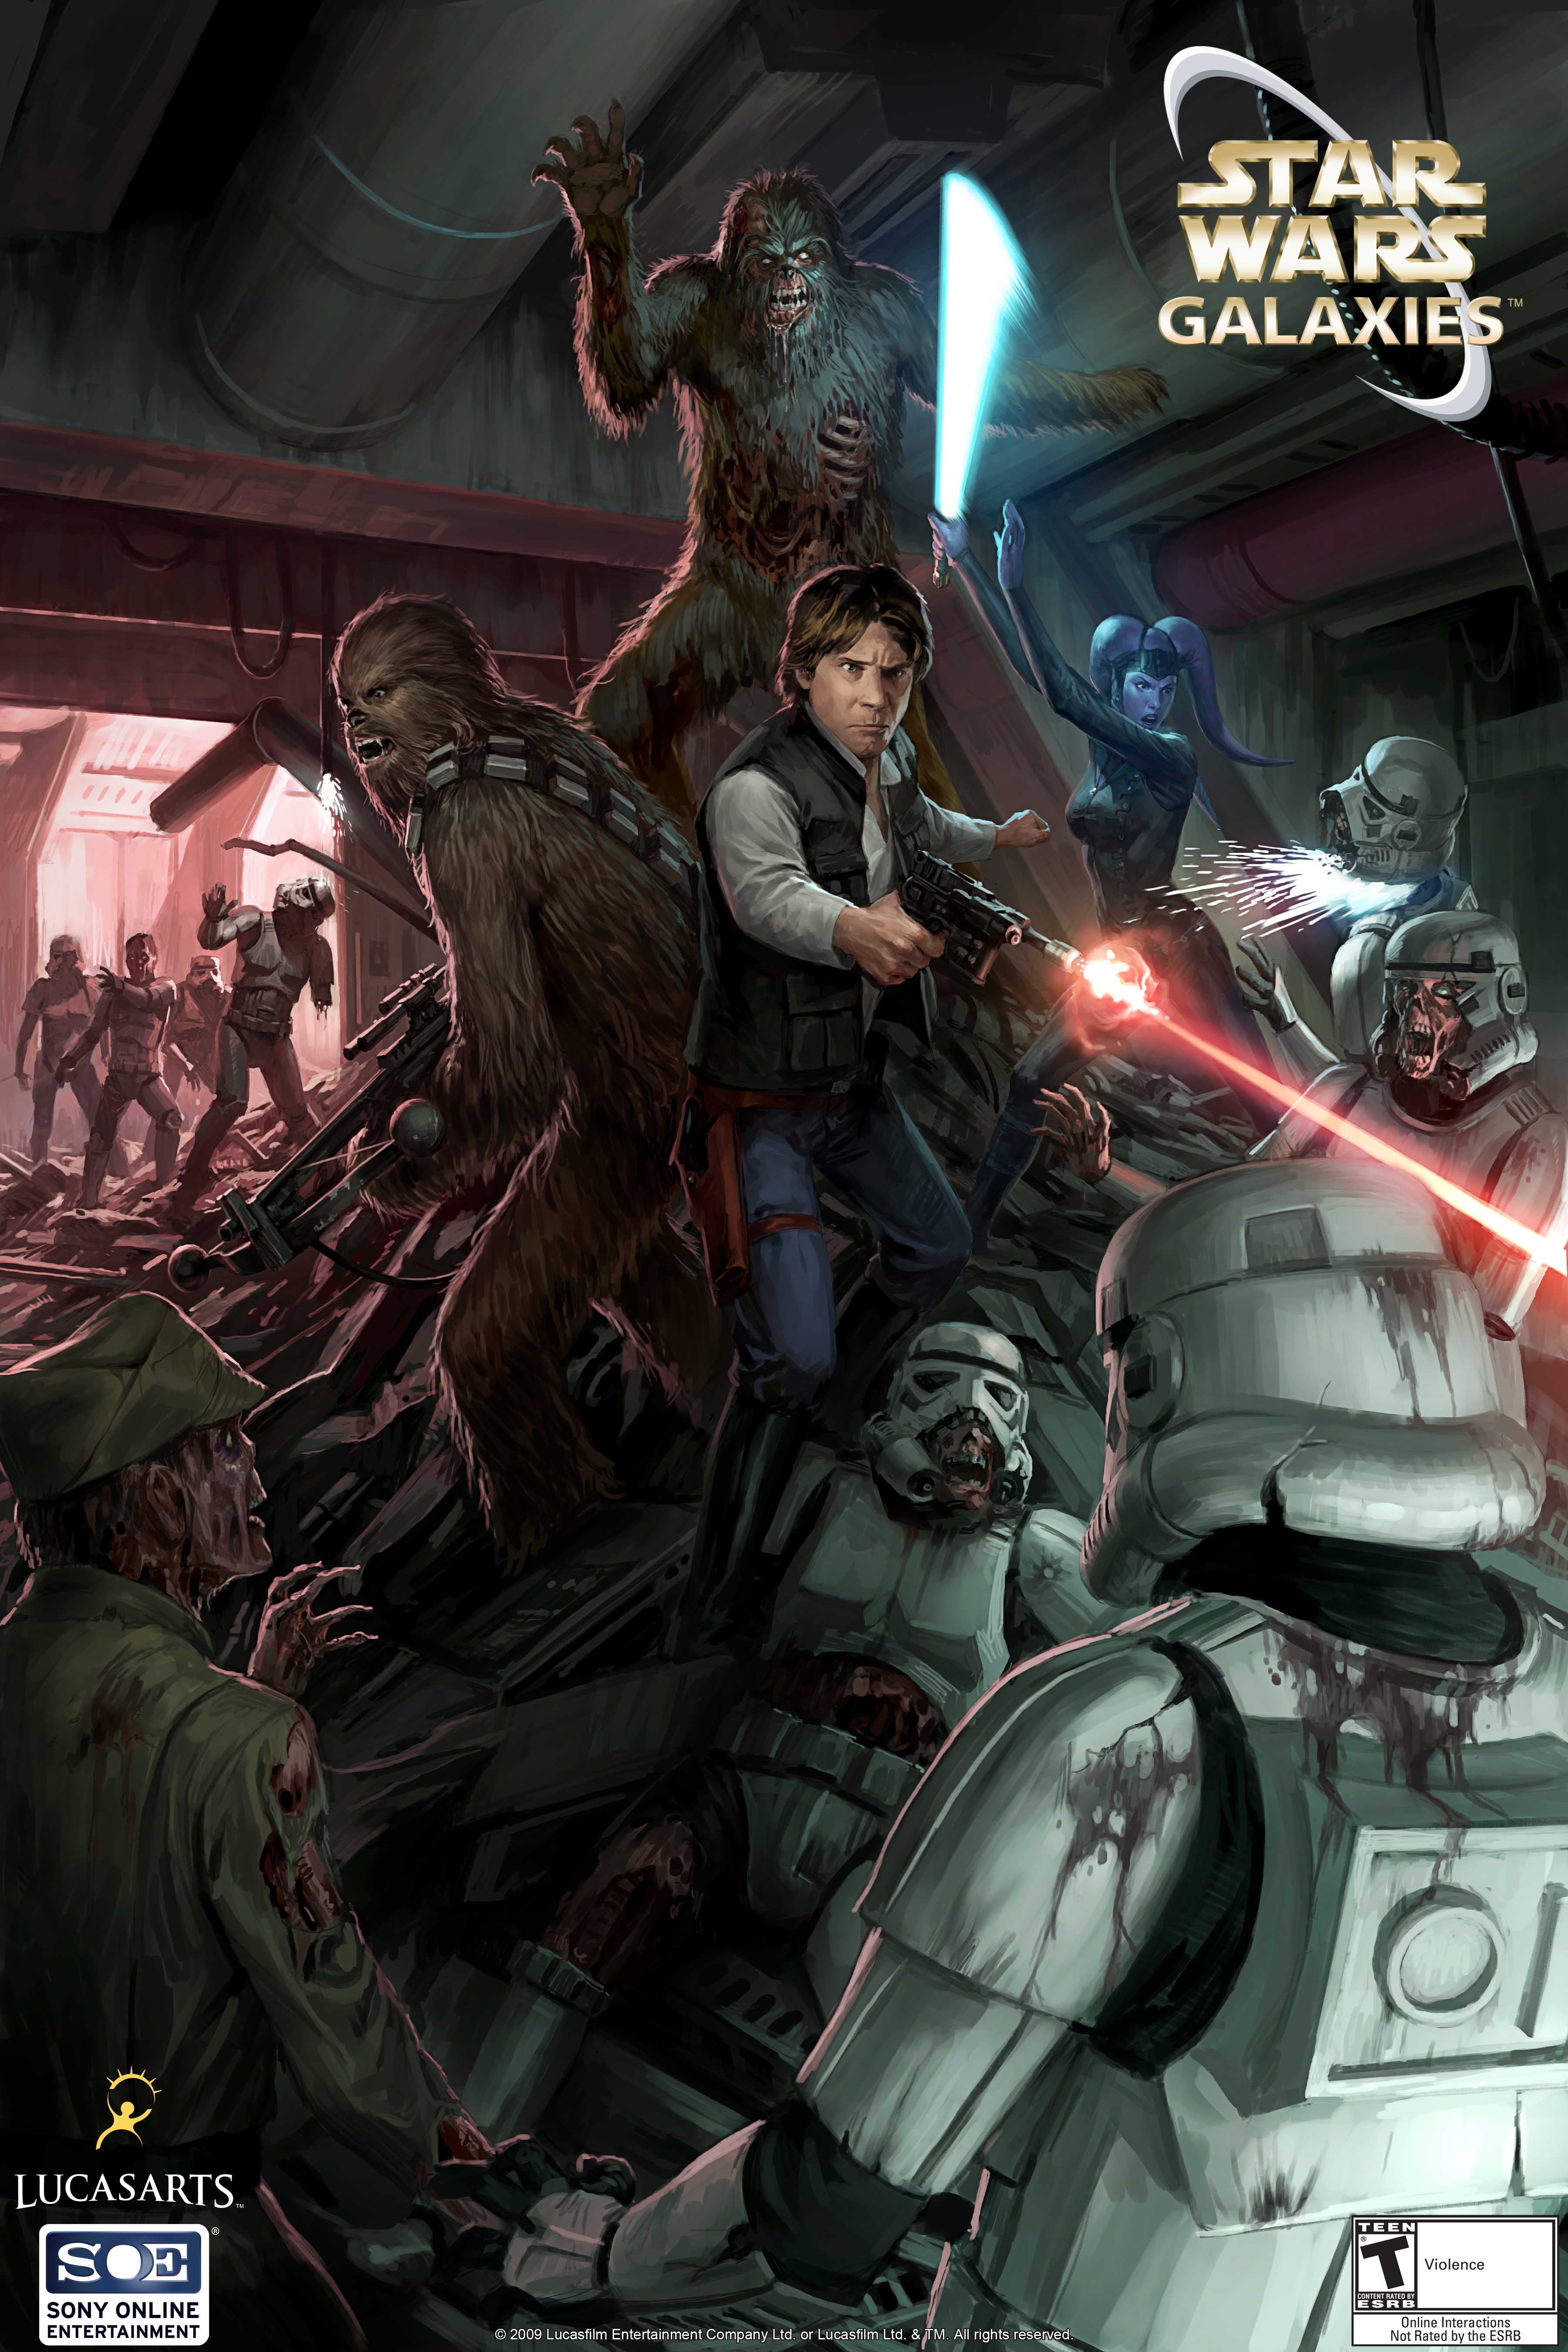 Star Wars, stormtroopers, zombies, Han Solo, Chewbacca, artwork - desktop wallpaper